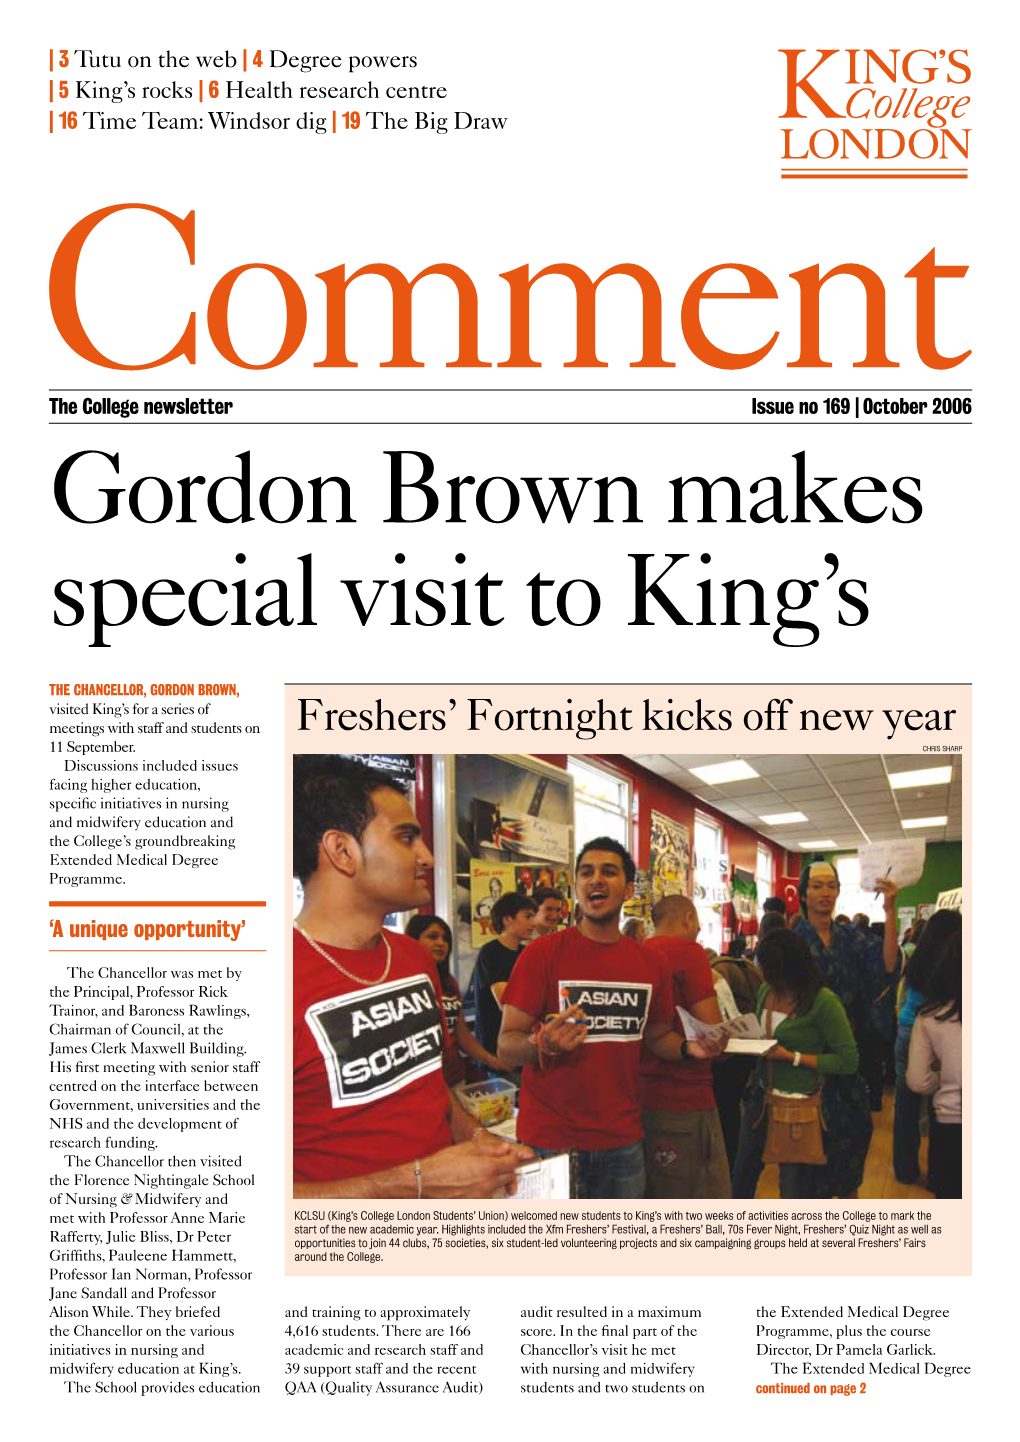 Gordon Brown Makes Special Visit to King's